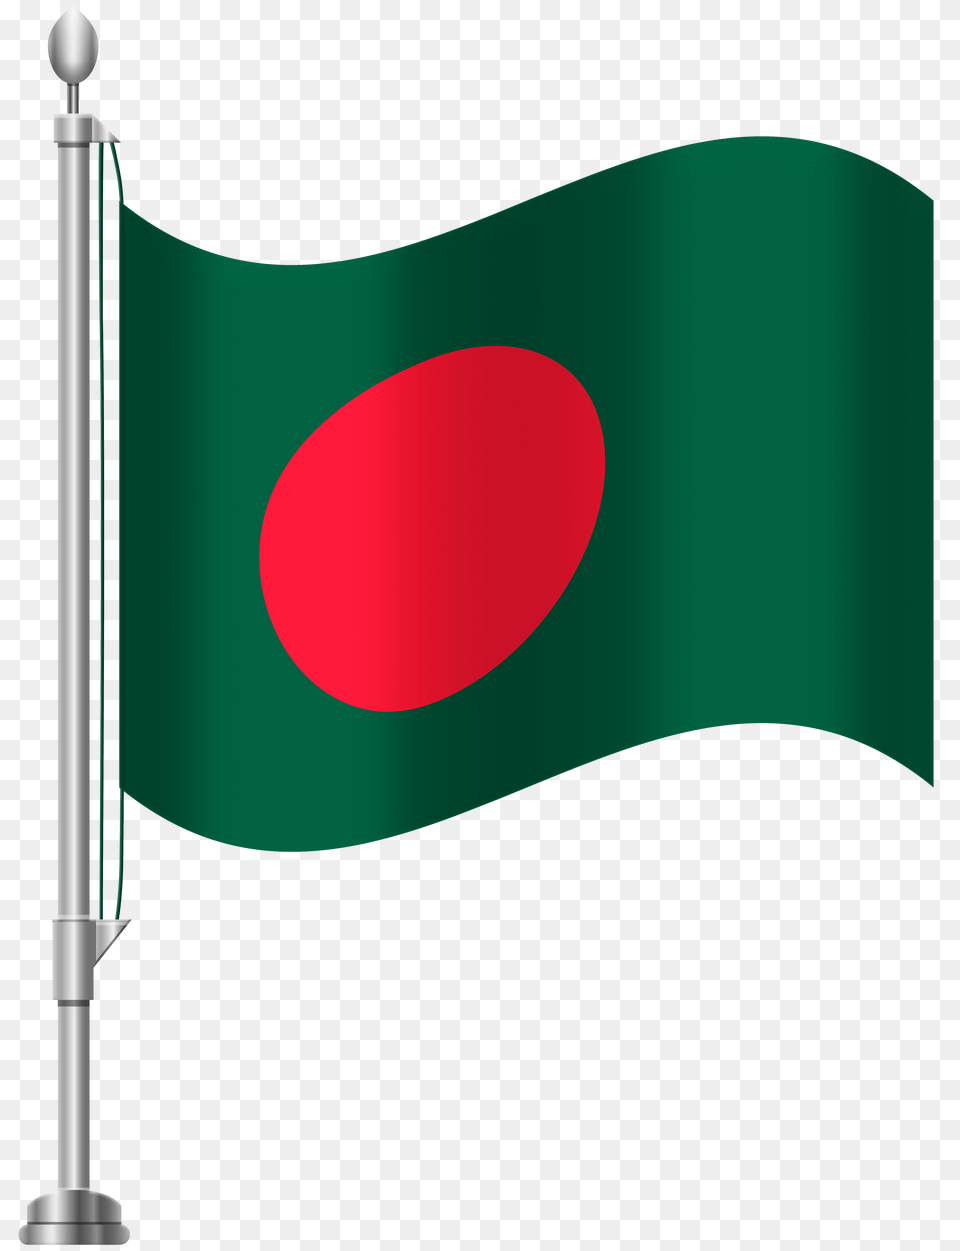 Bangladesh Flag Clip Art, Bangladesh Flag, Smoke Pipe Png